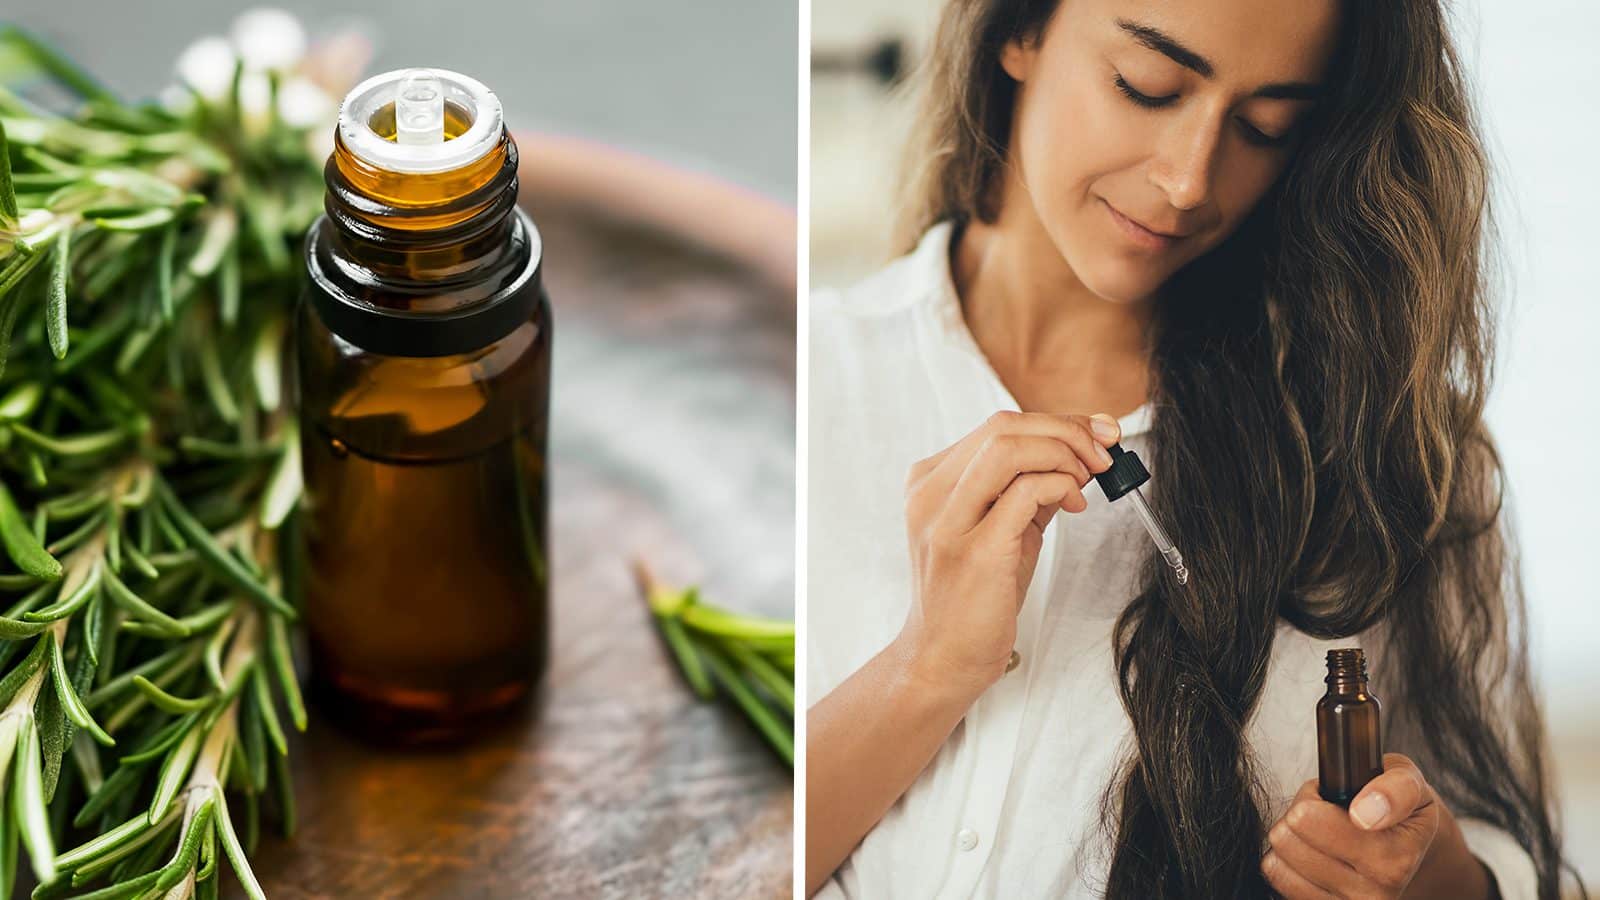 Here’s Why the Rosemary Oil for Hair Trend Keeps Breaking TikTok